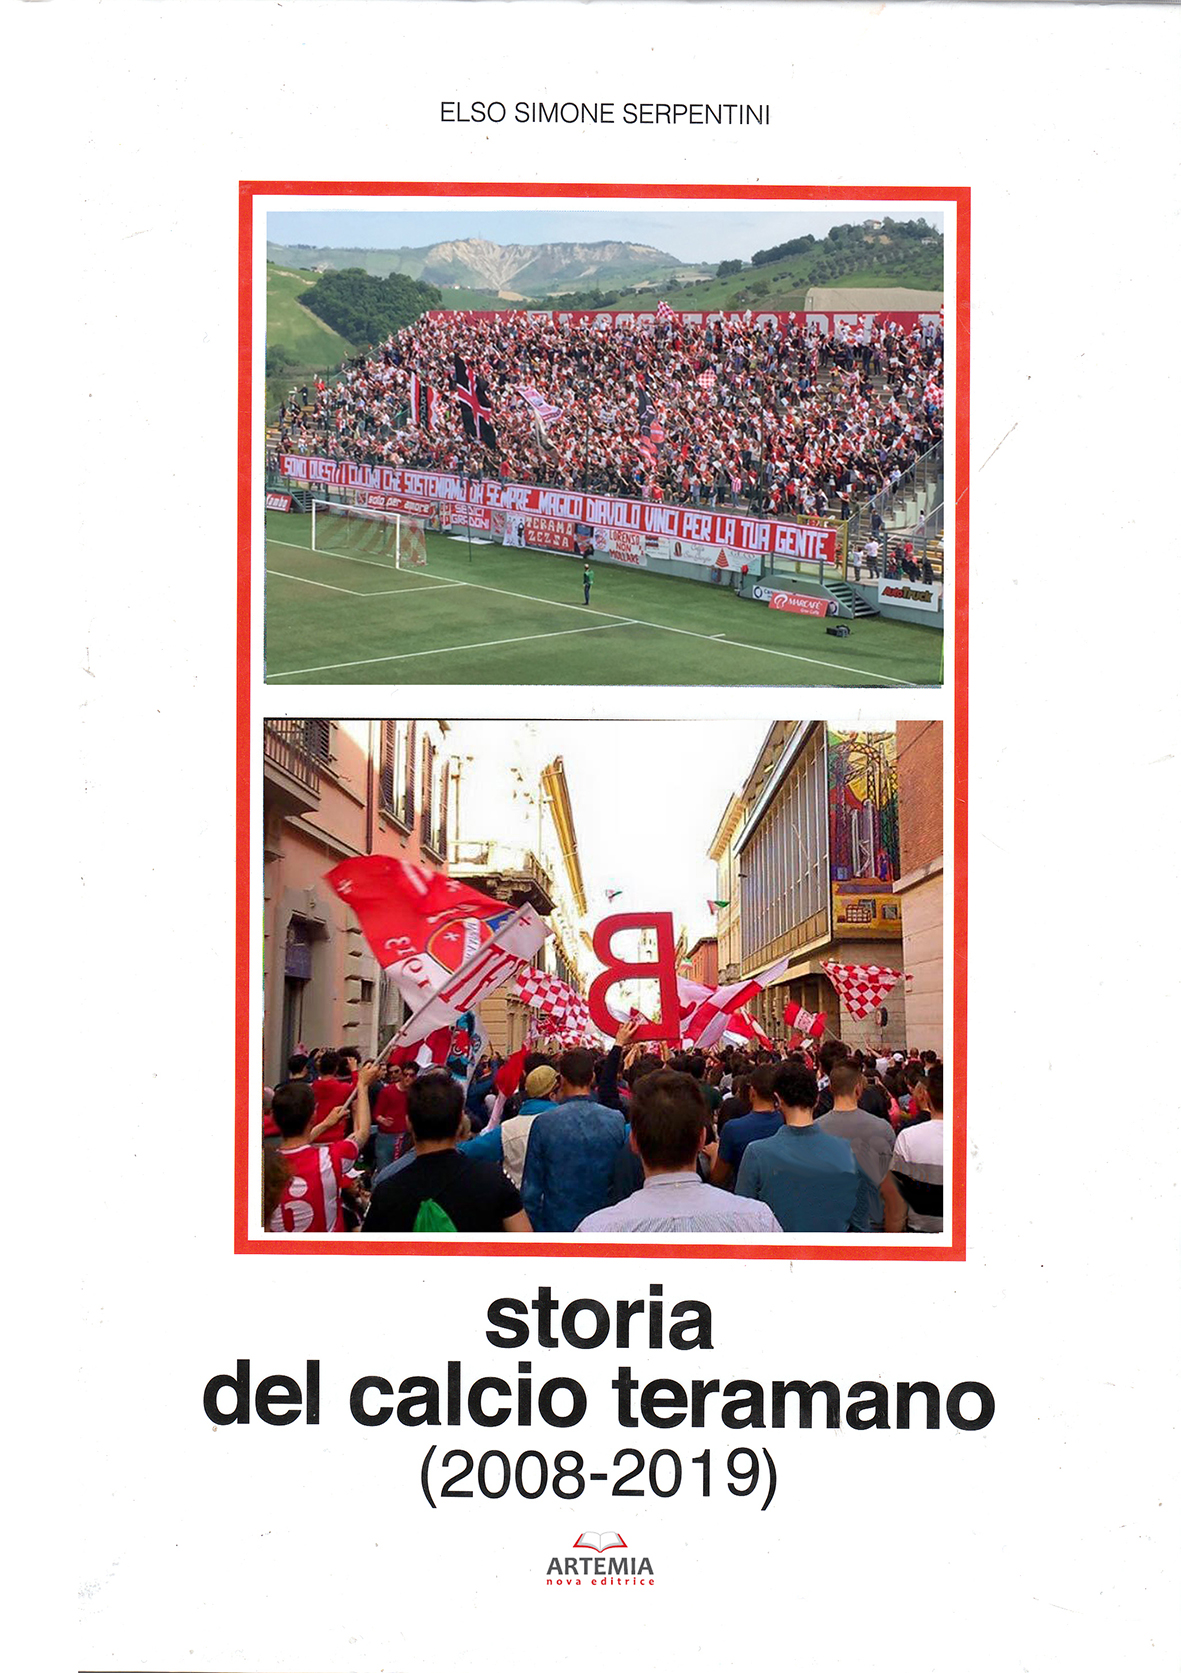 STORIA DEL CALCIO TERAMANO (2008-2019)